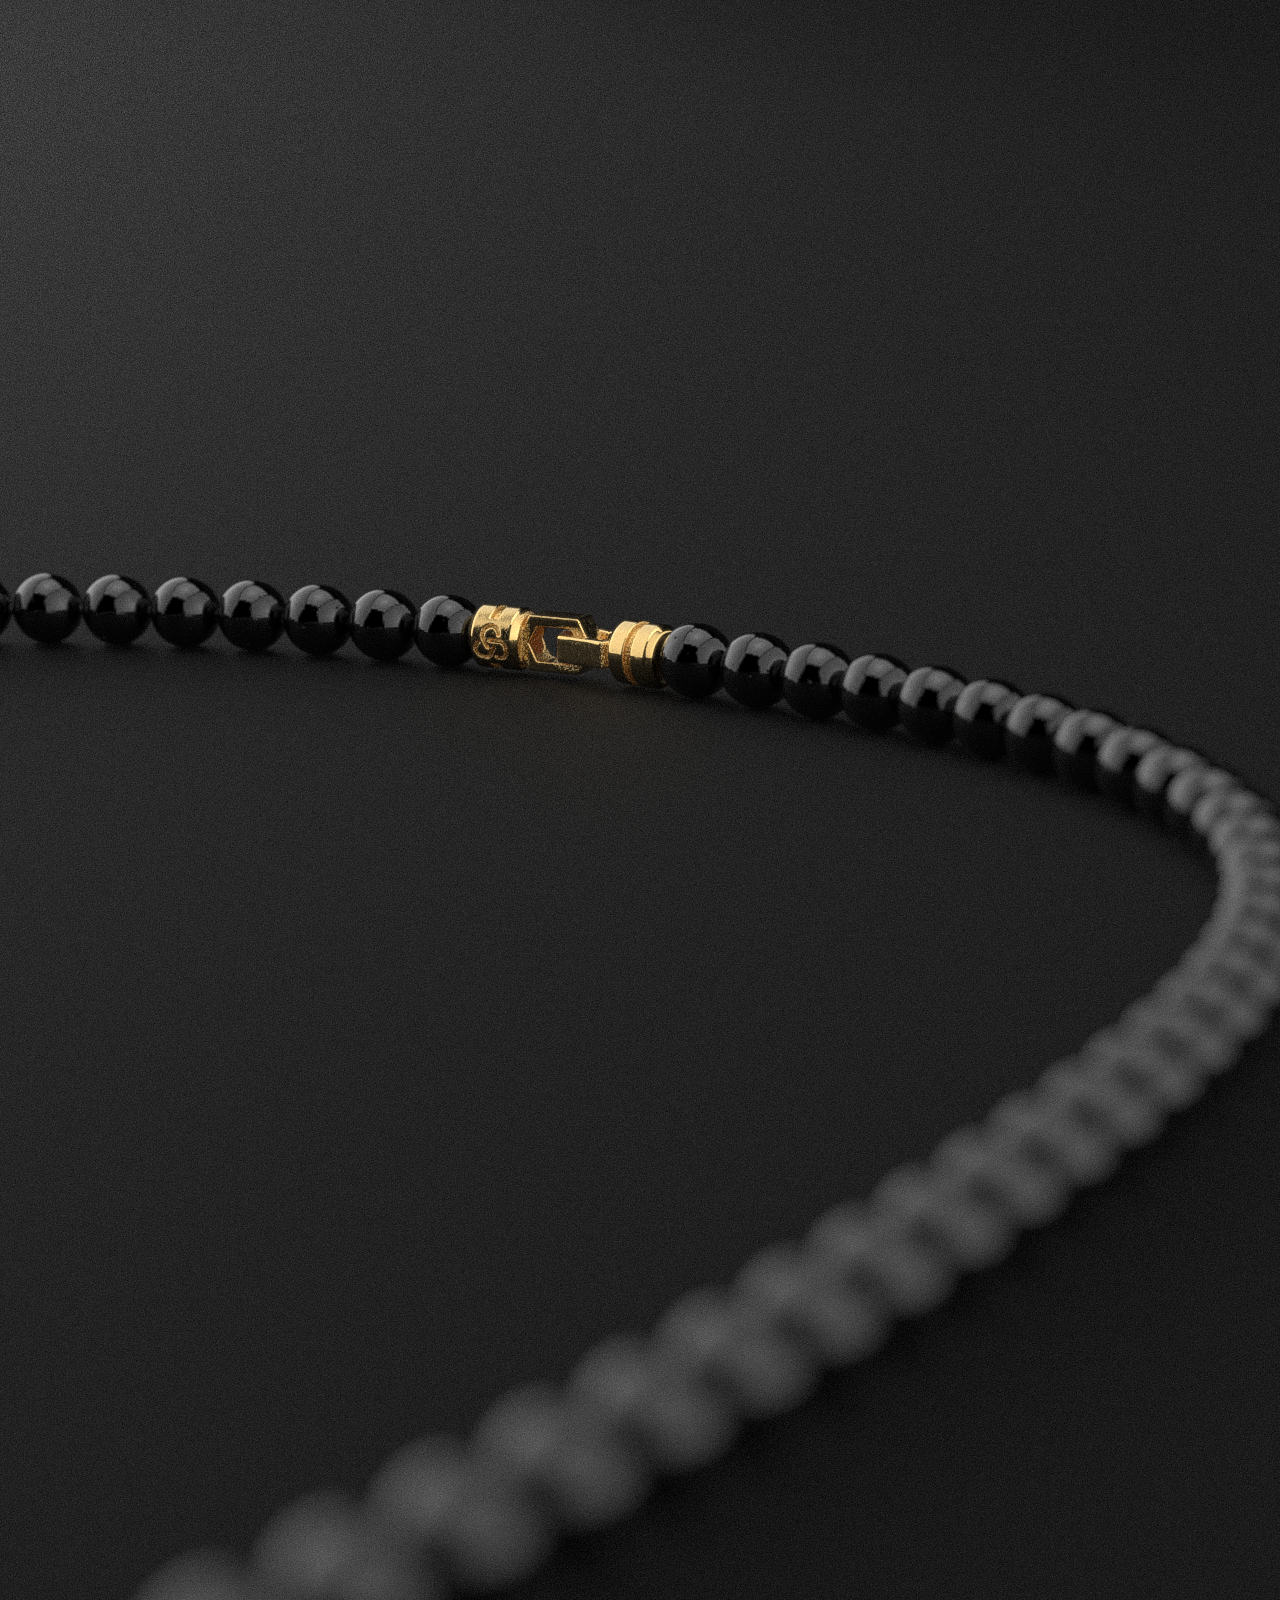 Onyx + Turquoise + Tridacna Necklace 6mm | Vertex